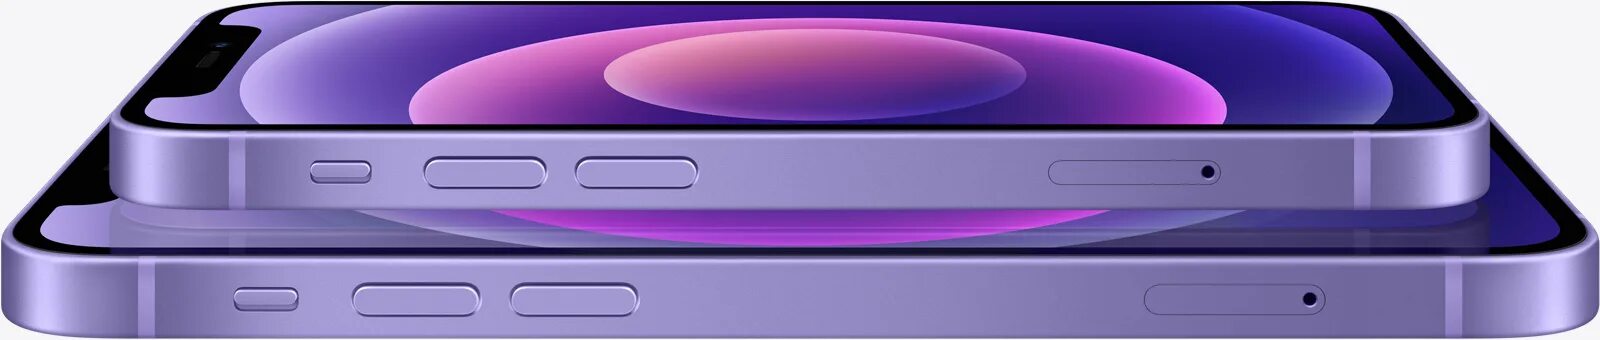 Динамик айфон 12 мини. Iphone 12 Mini 128gb Purple.